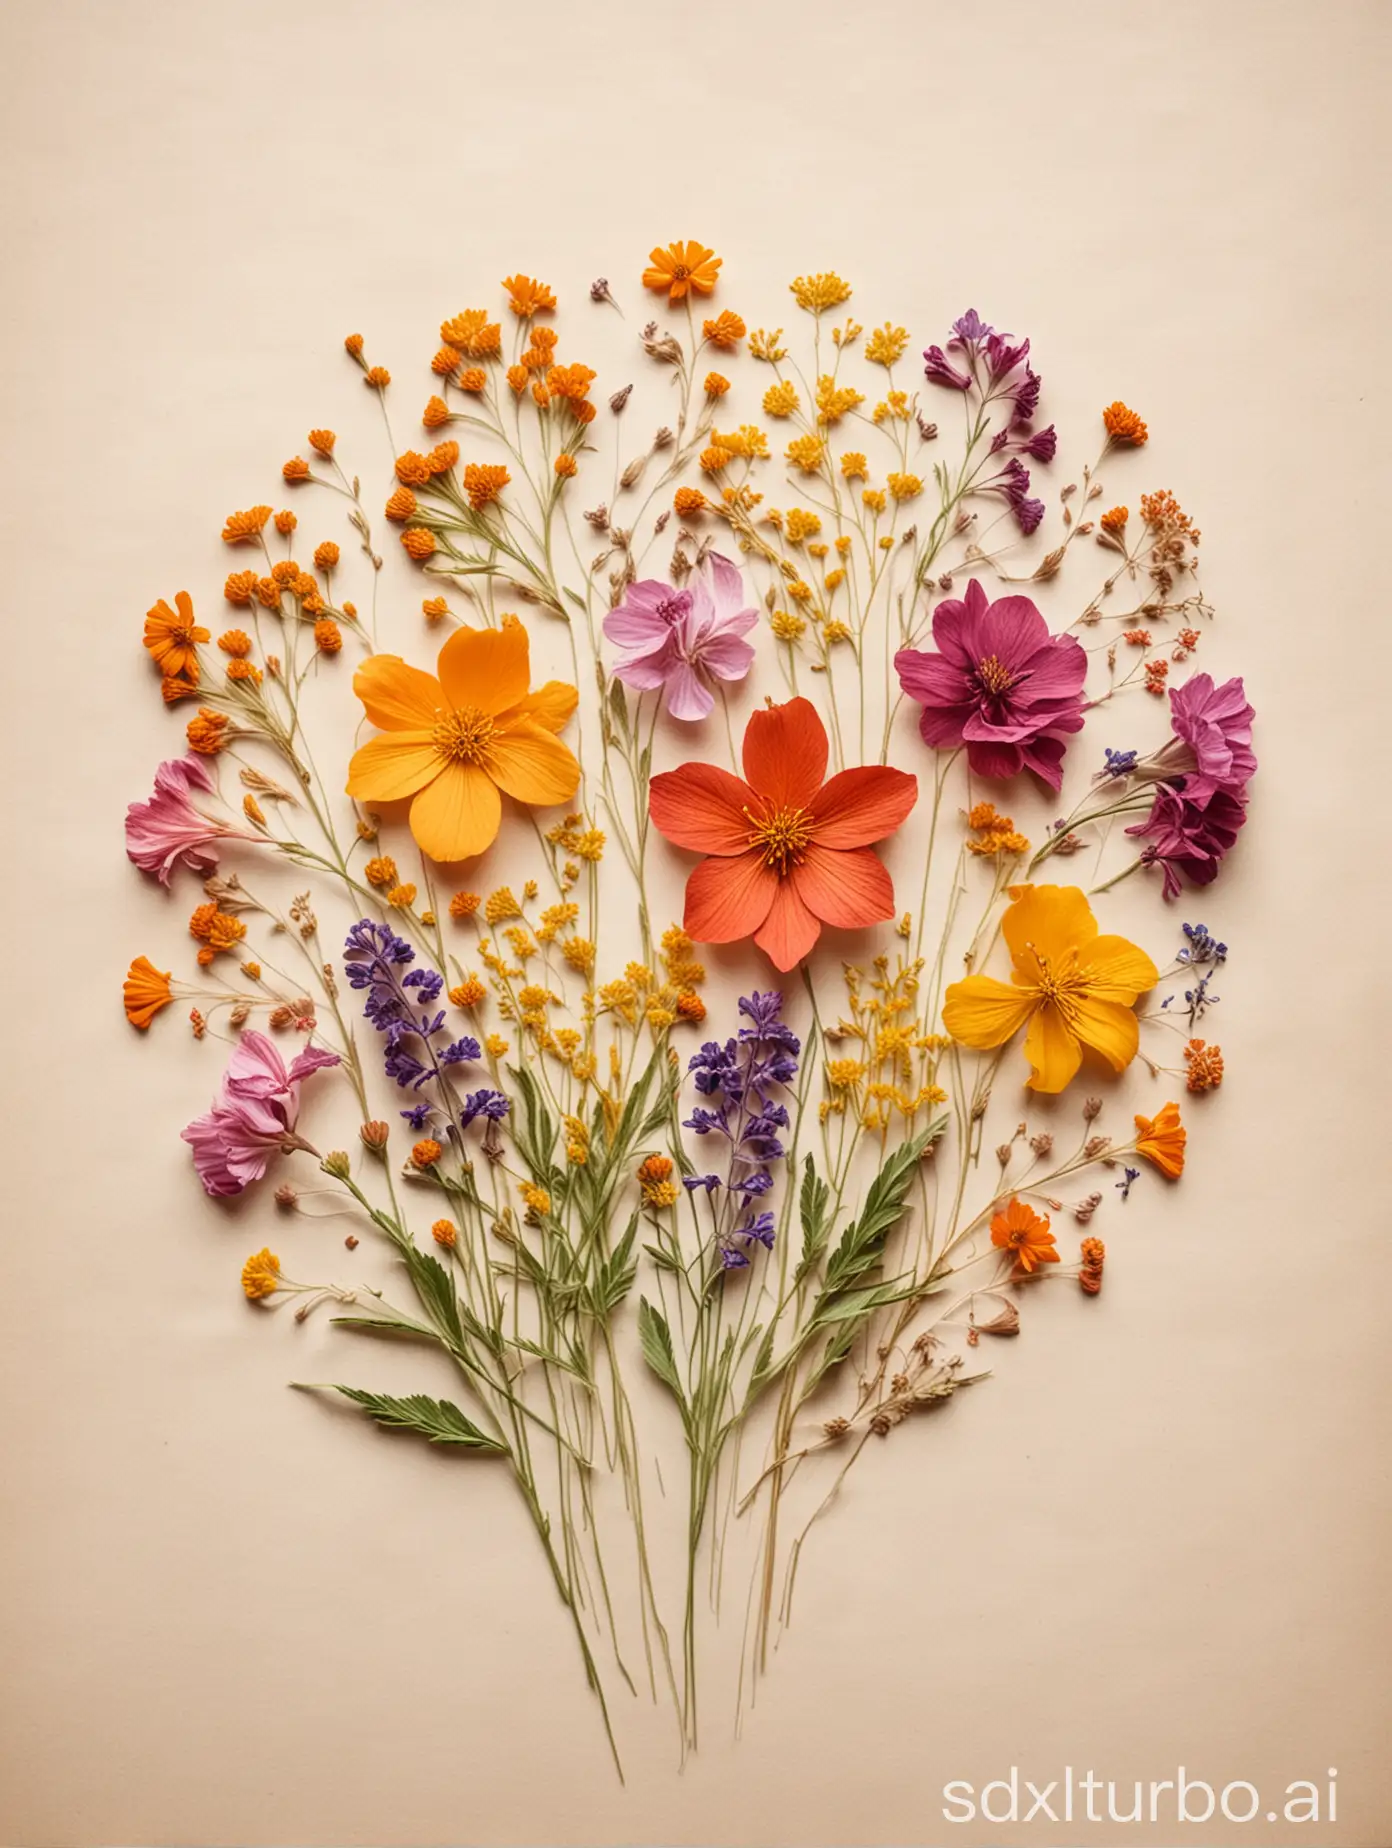 Exquisite-Pressed-Flowers-on-Elegant-Paper-Background